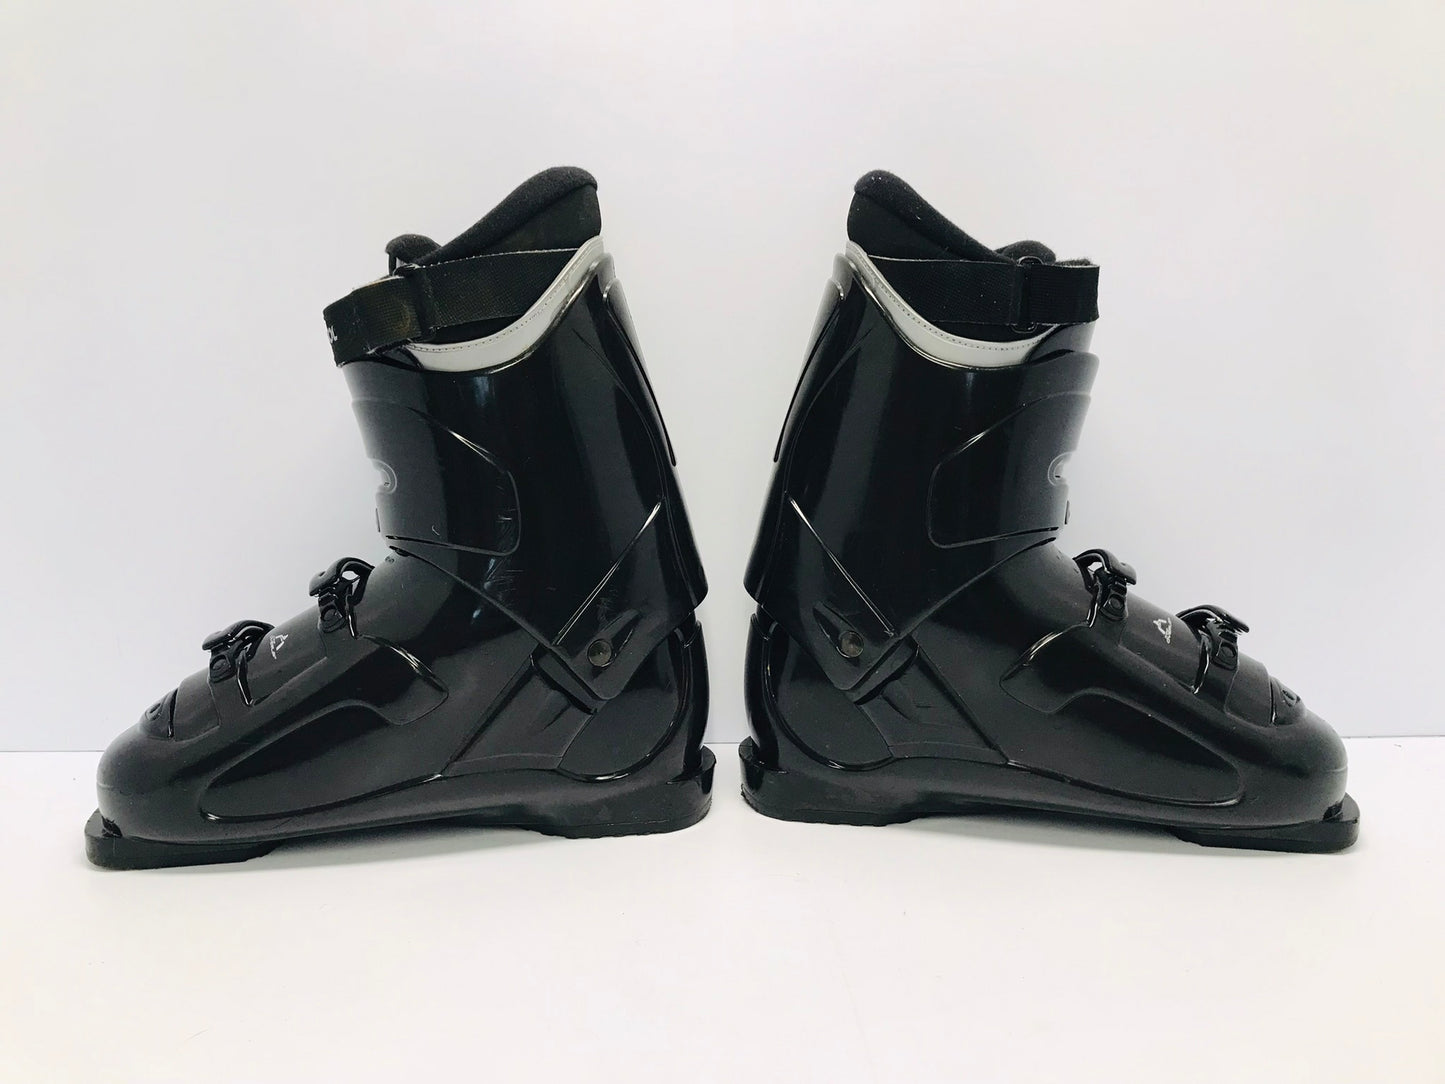 Ski Boots Mondo Size 29.5 Men's Size 11.5 335 mm Rossignol Axium Black Like New